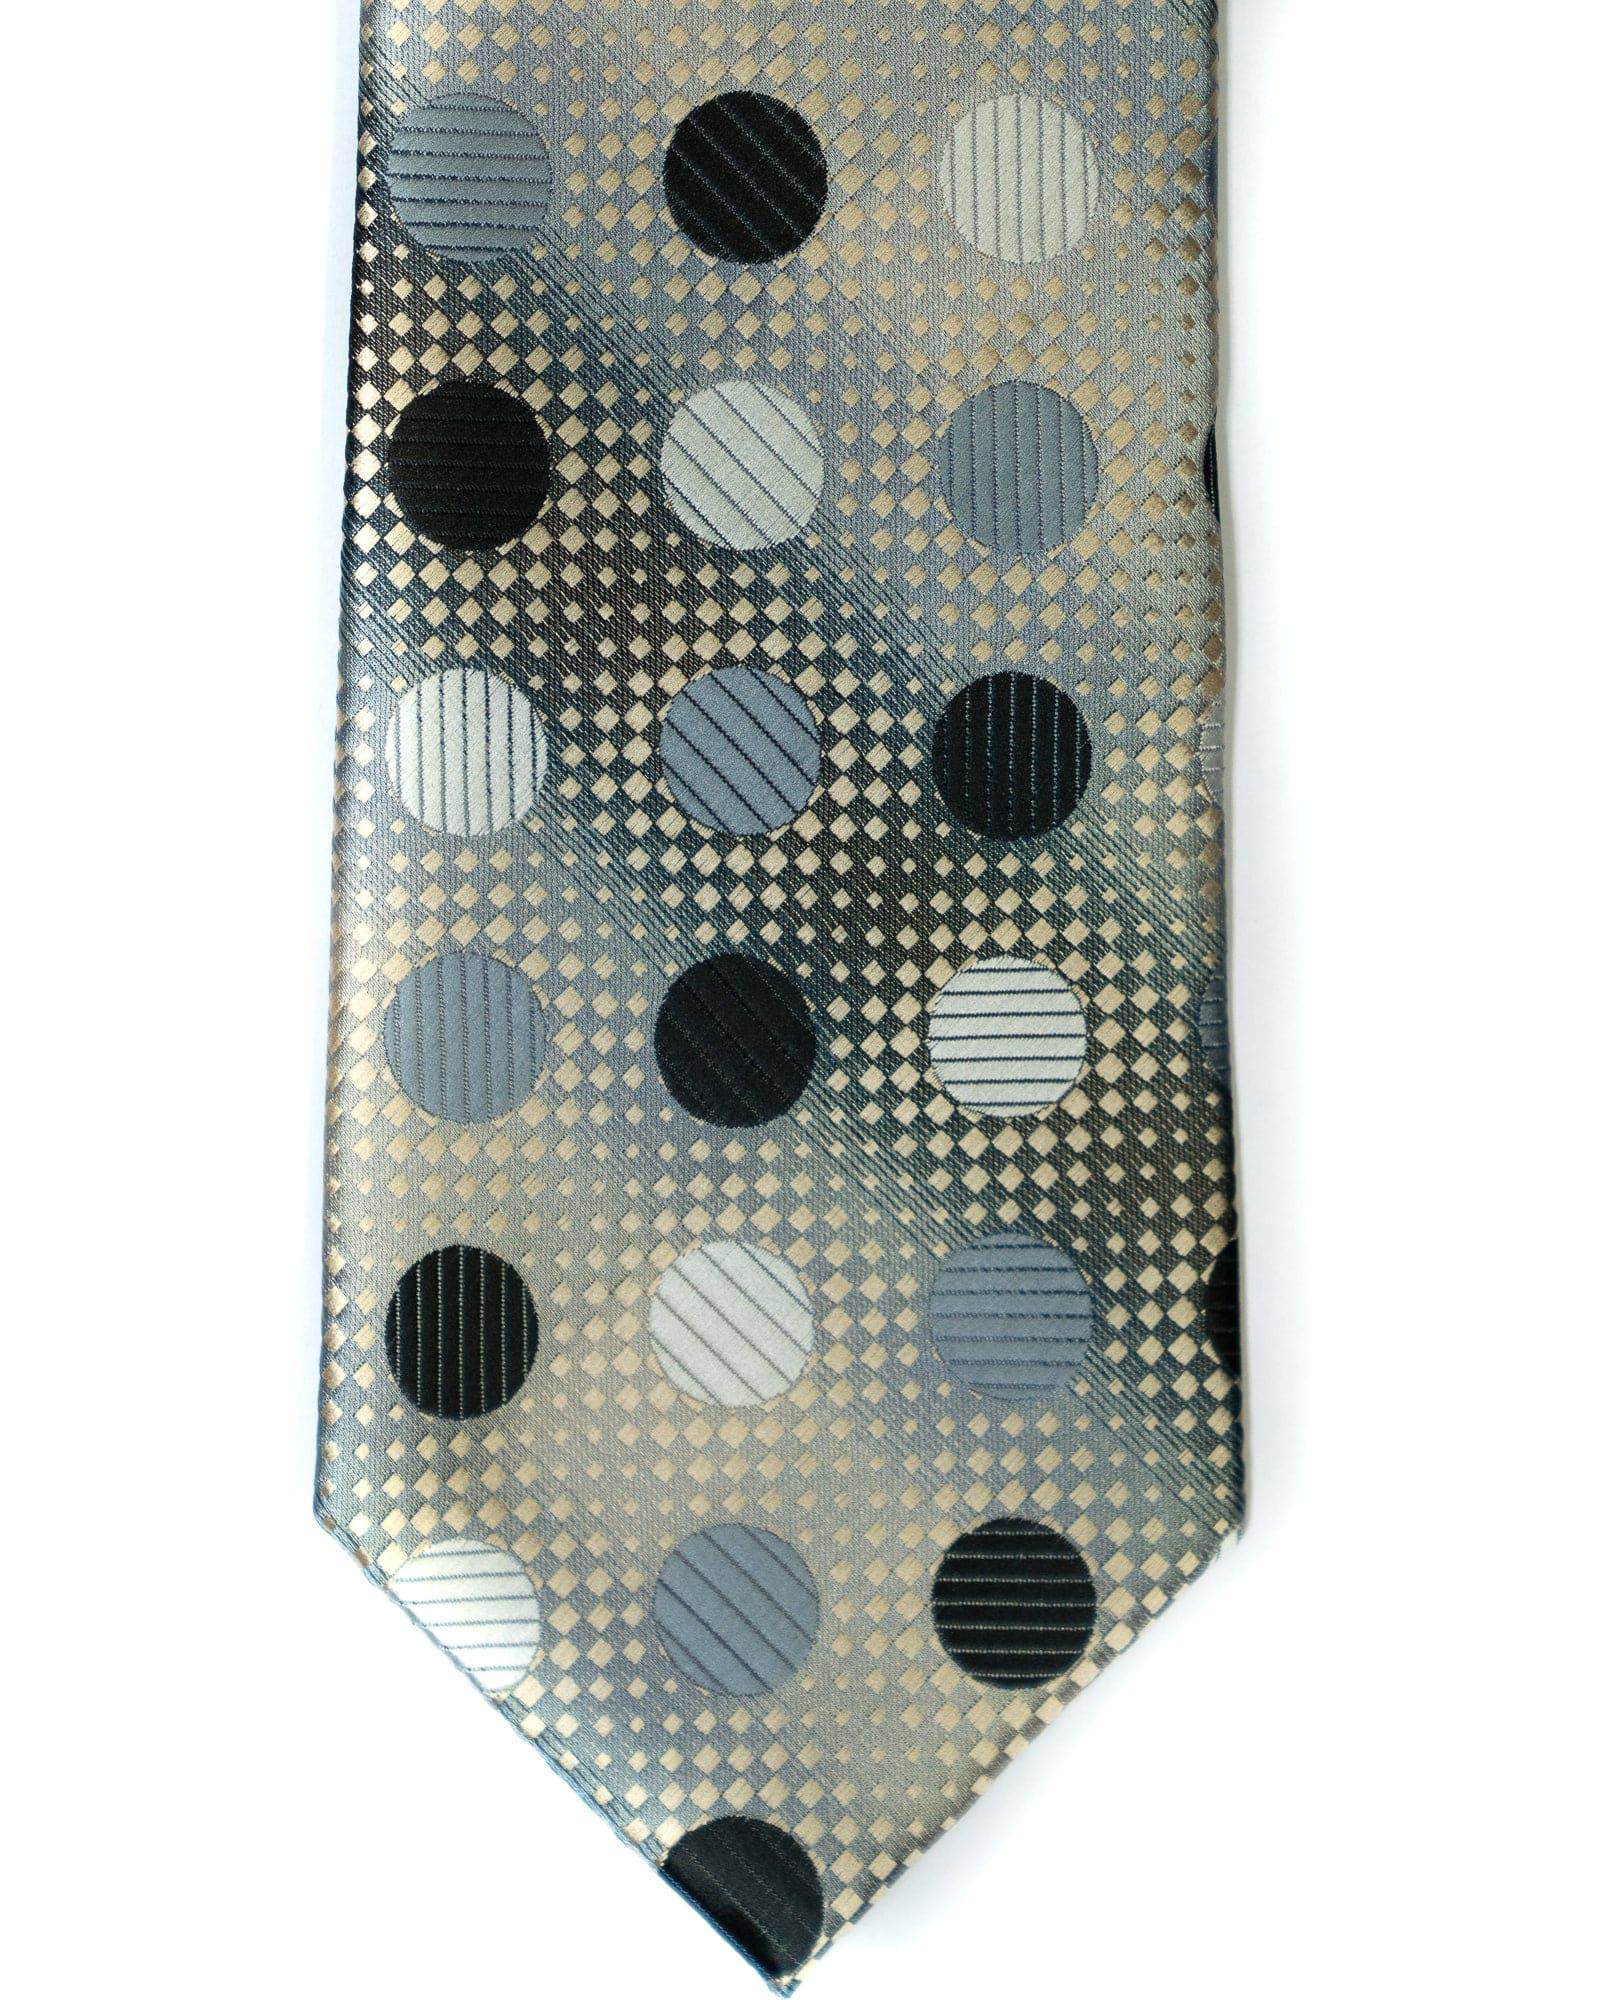 Venturi Uomo Dot Tie in Grey with Tan - Rainwater's Men's Clothing and Tuxedo Rental